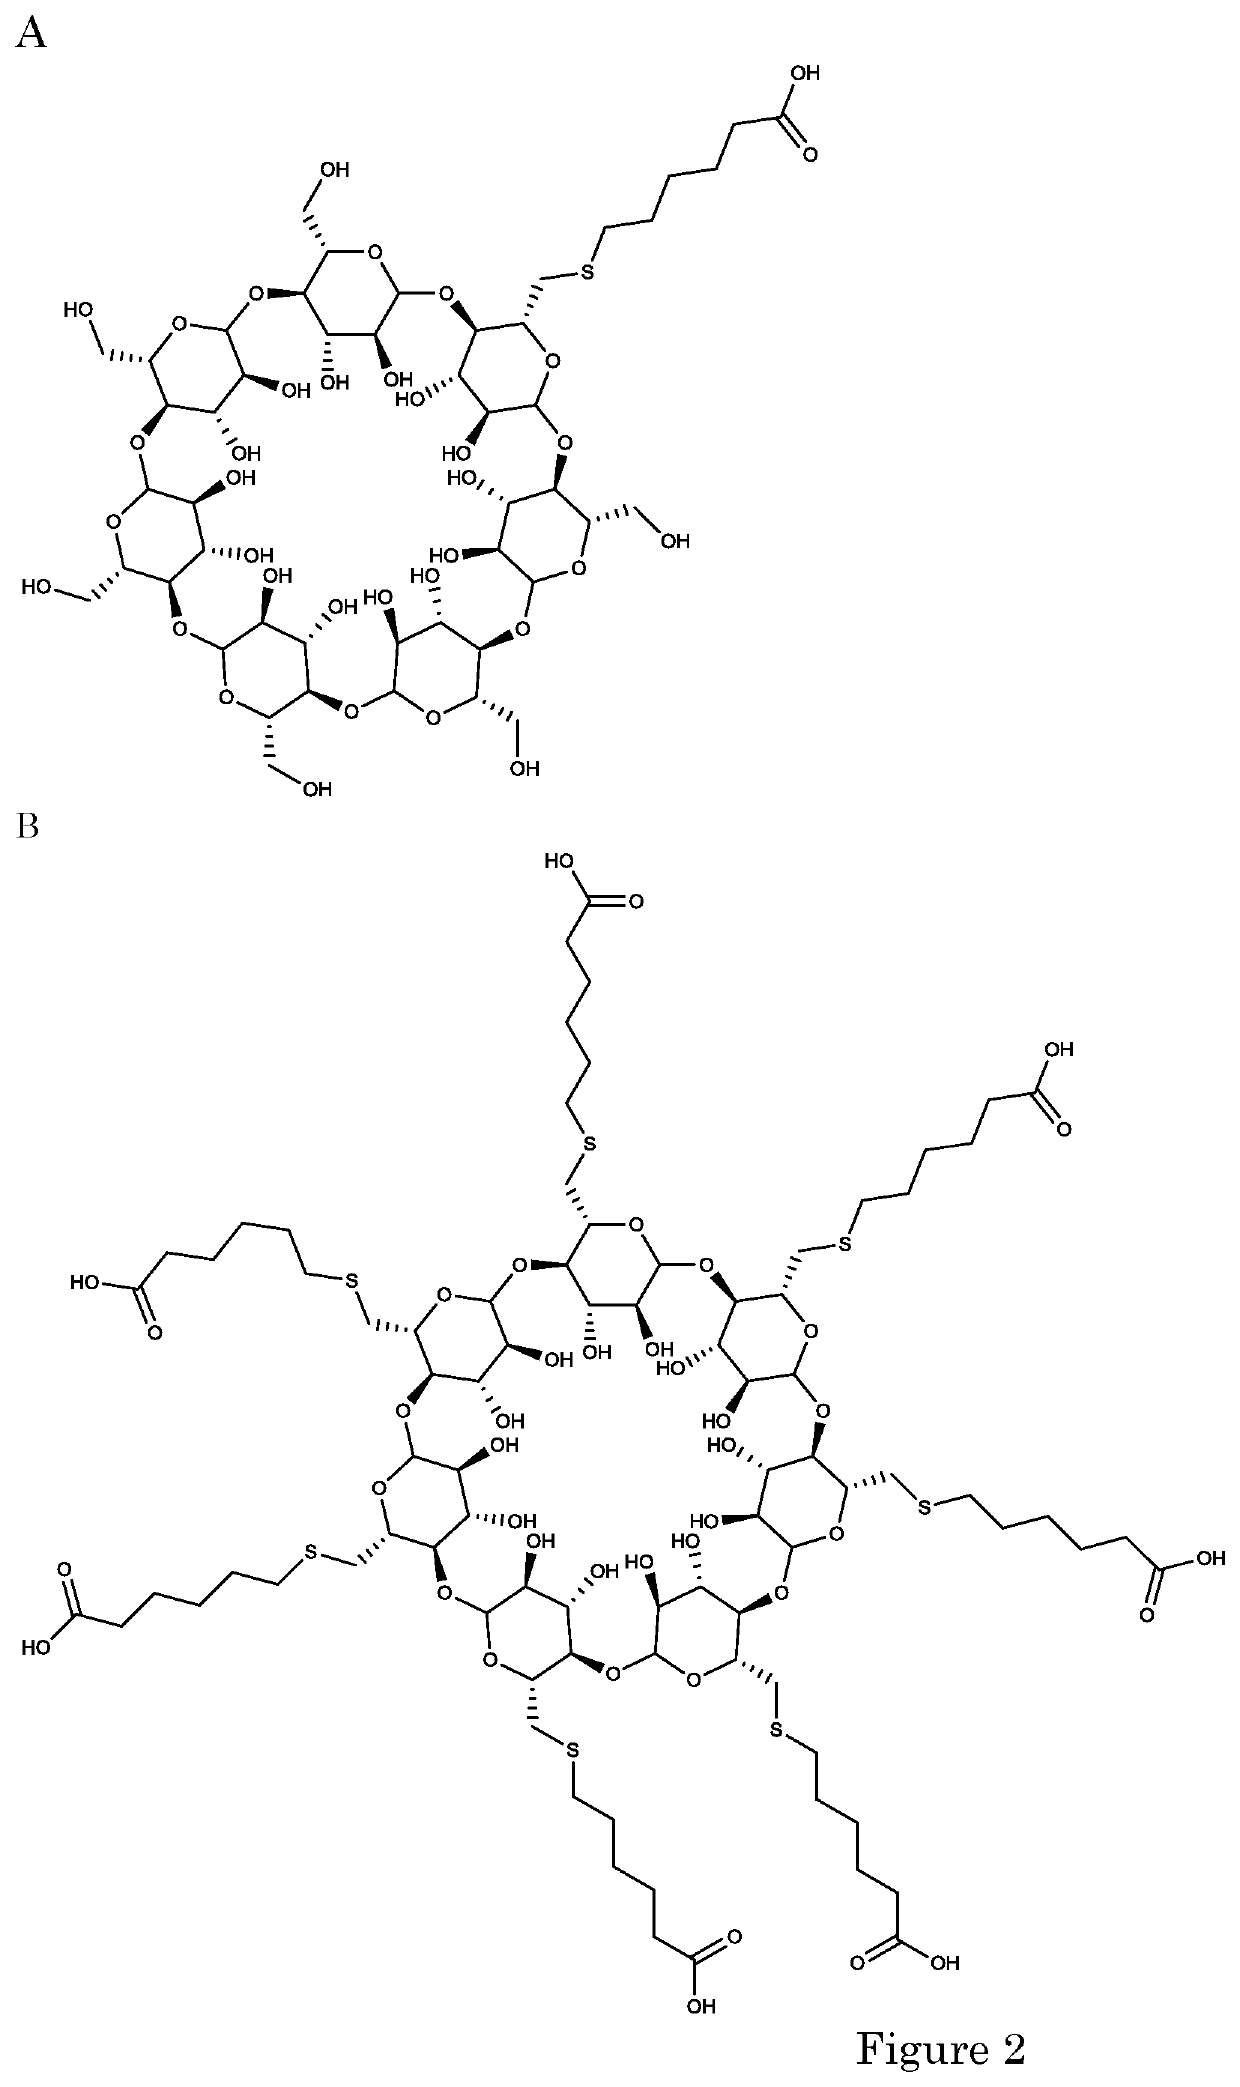 Cyclodextrins as procoagulants